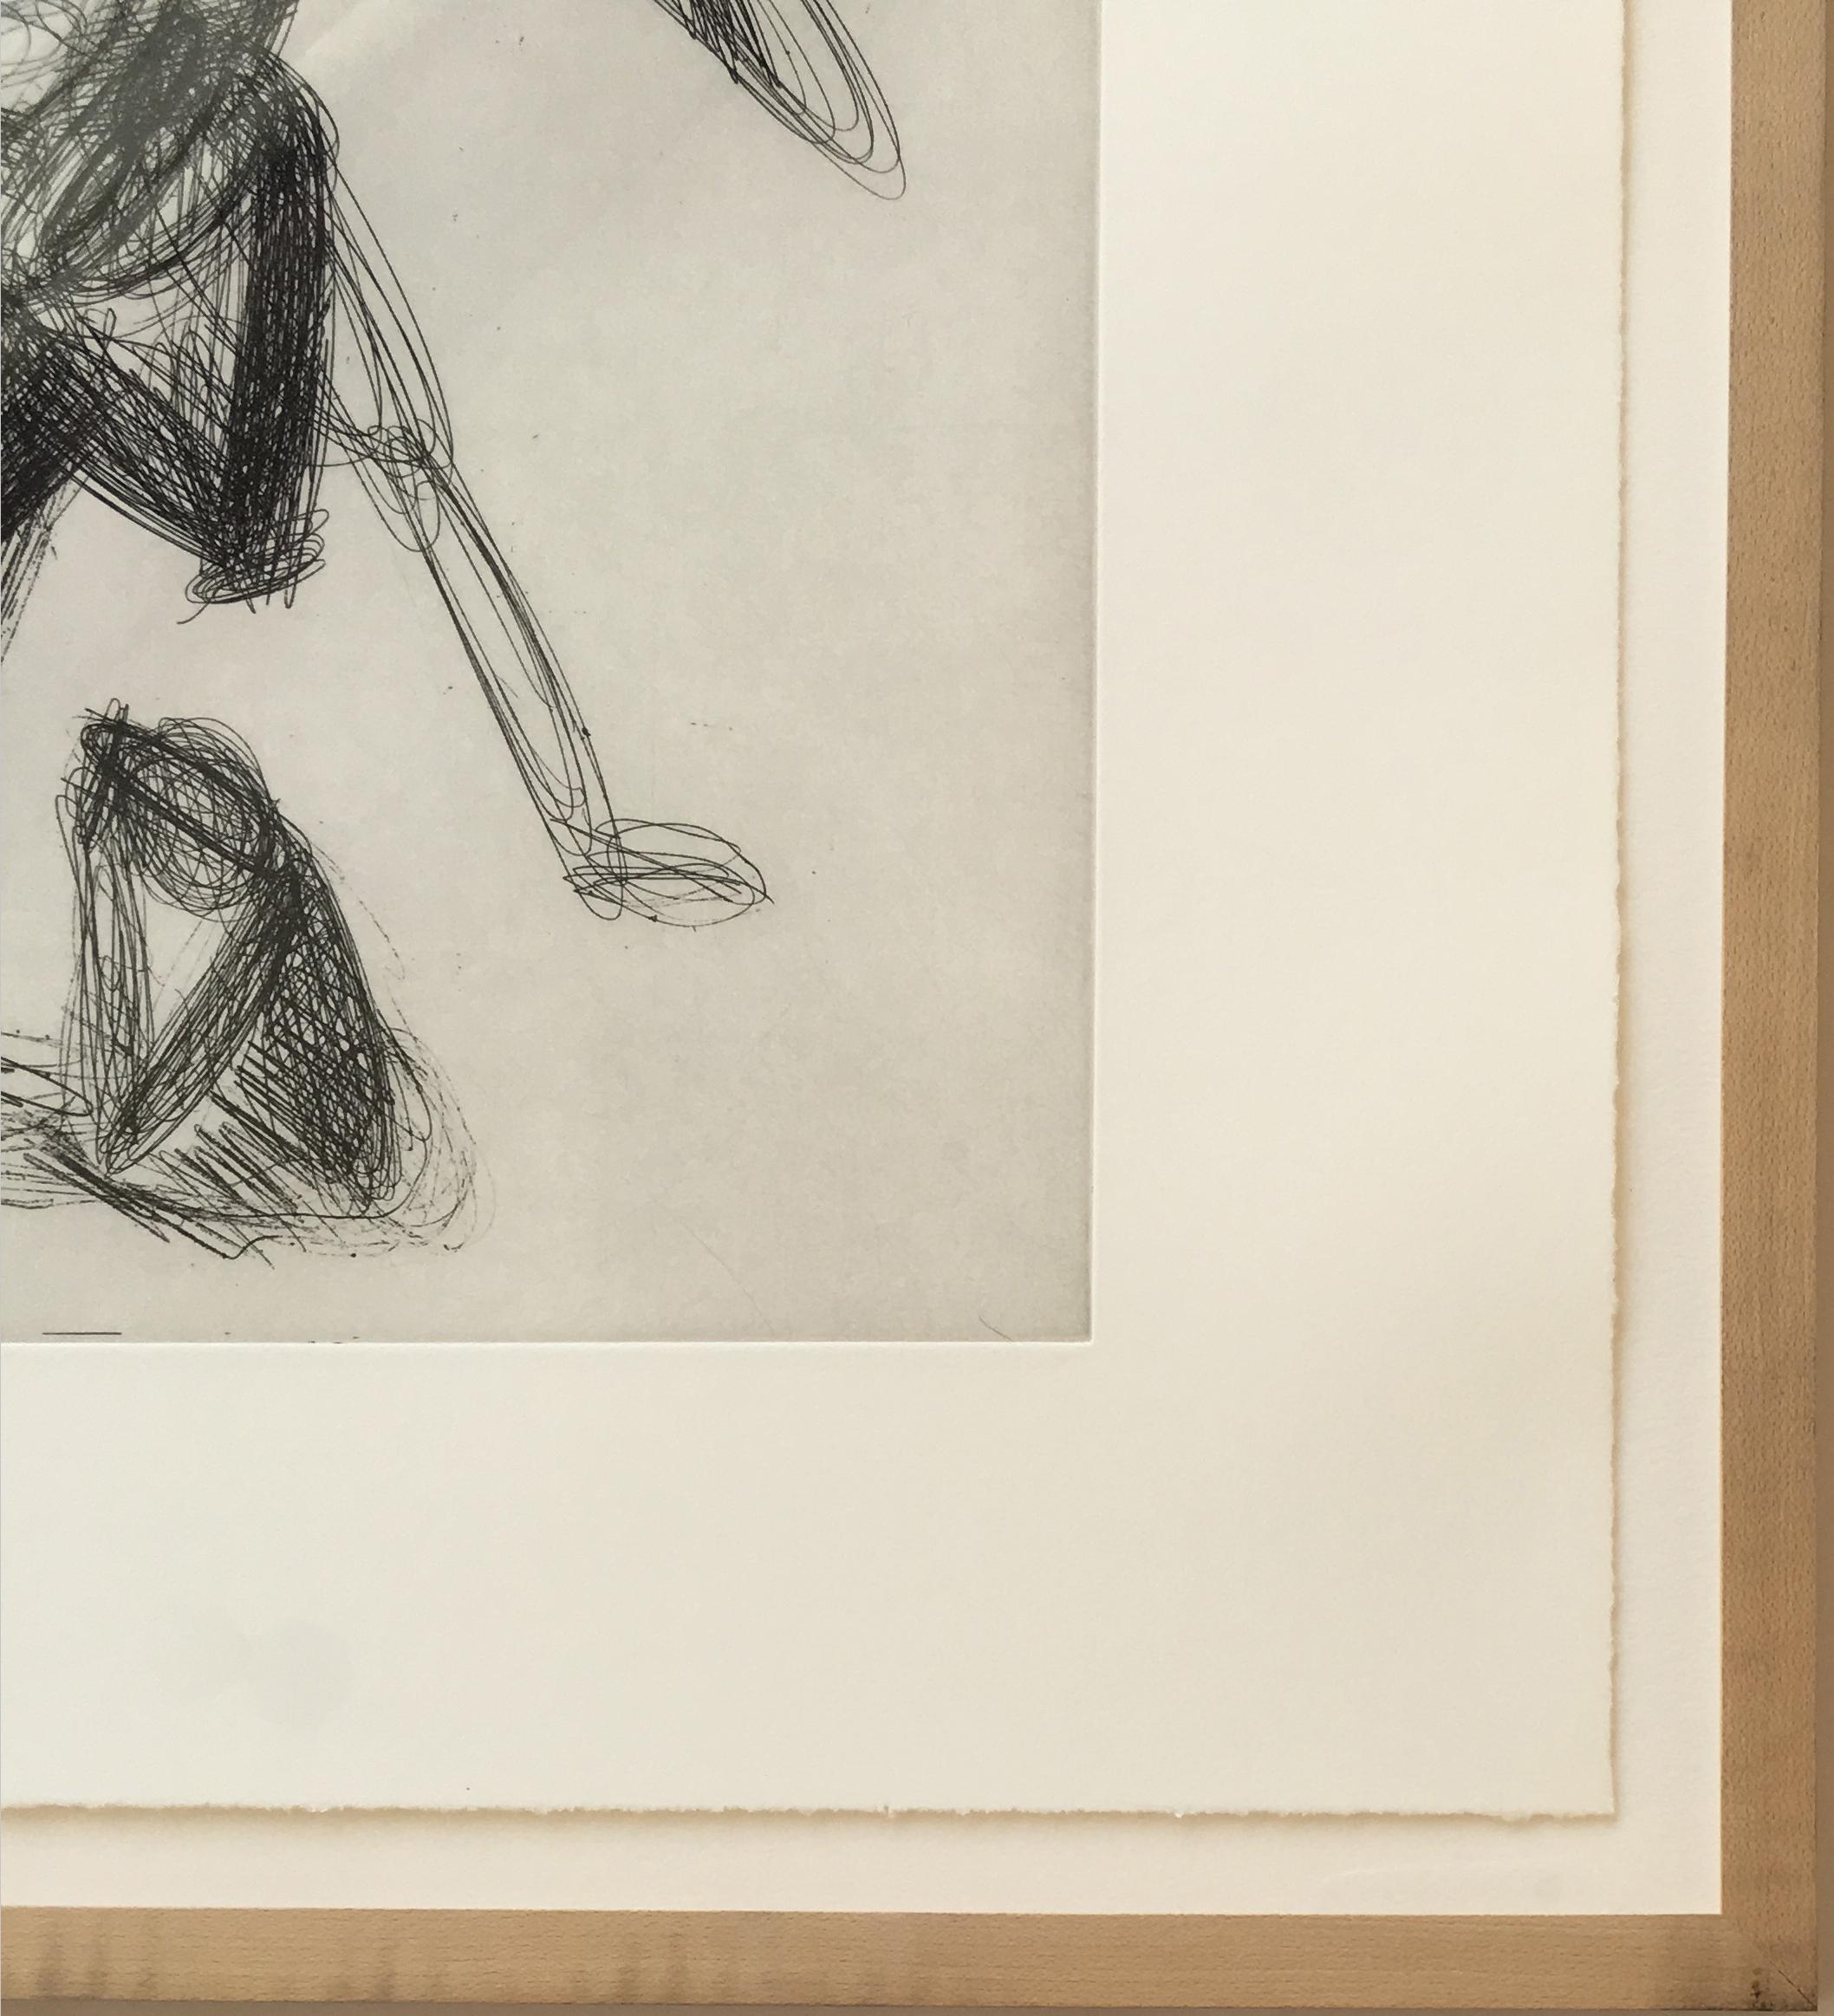 Joel Shapiro
Untitled, 1995
Hardground etching
12 x 13 3/4 inches (image)
18 x 19 inches (sheet)
20 x 21 inches (frame)
Edition 5 of 30
Signed